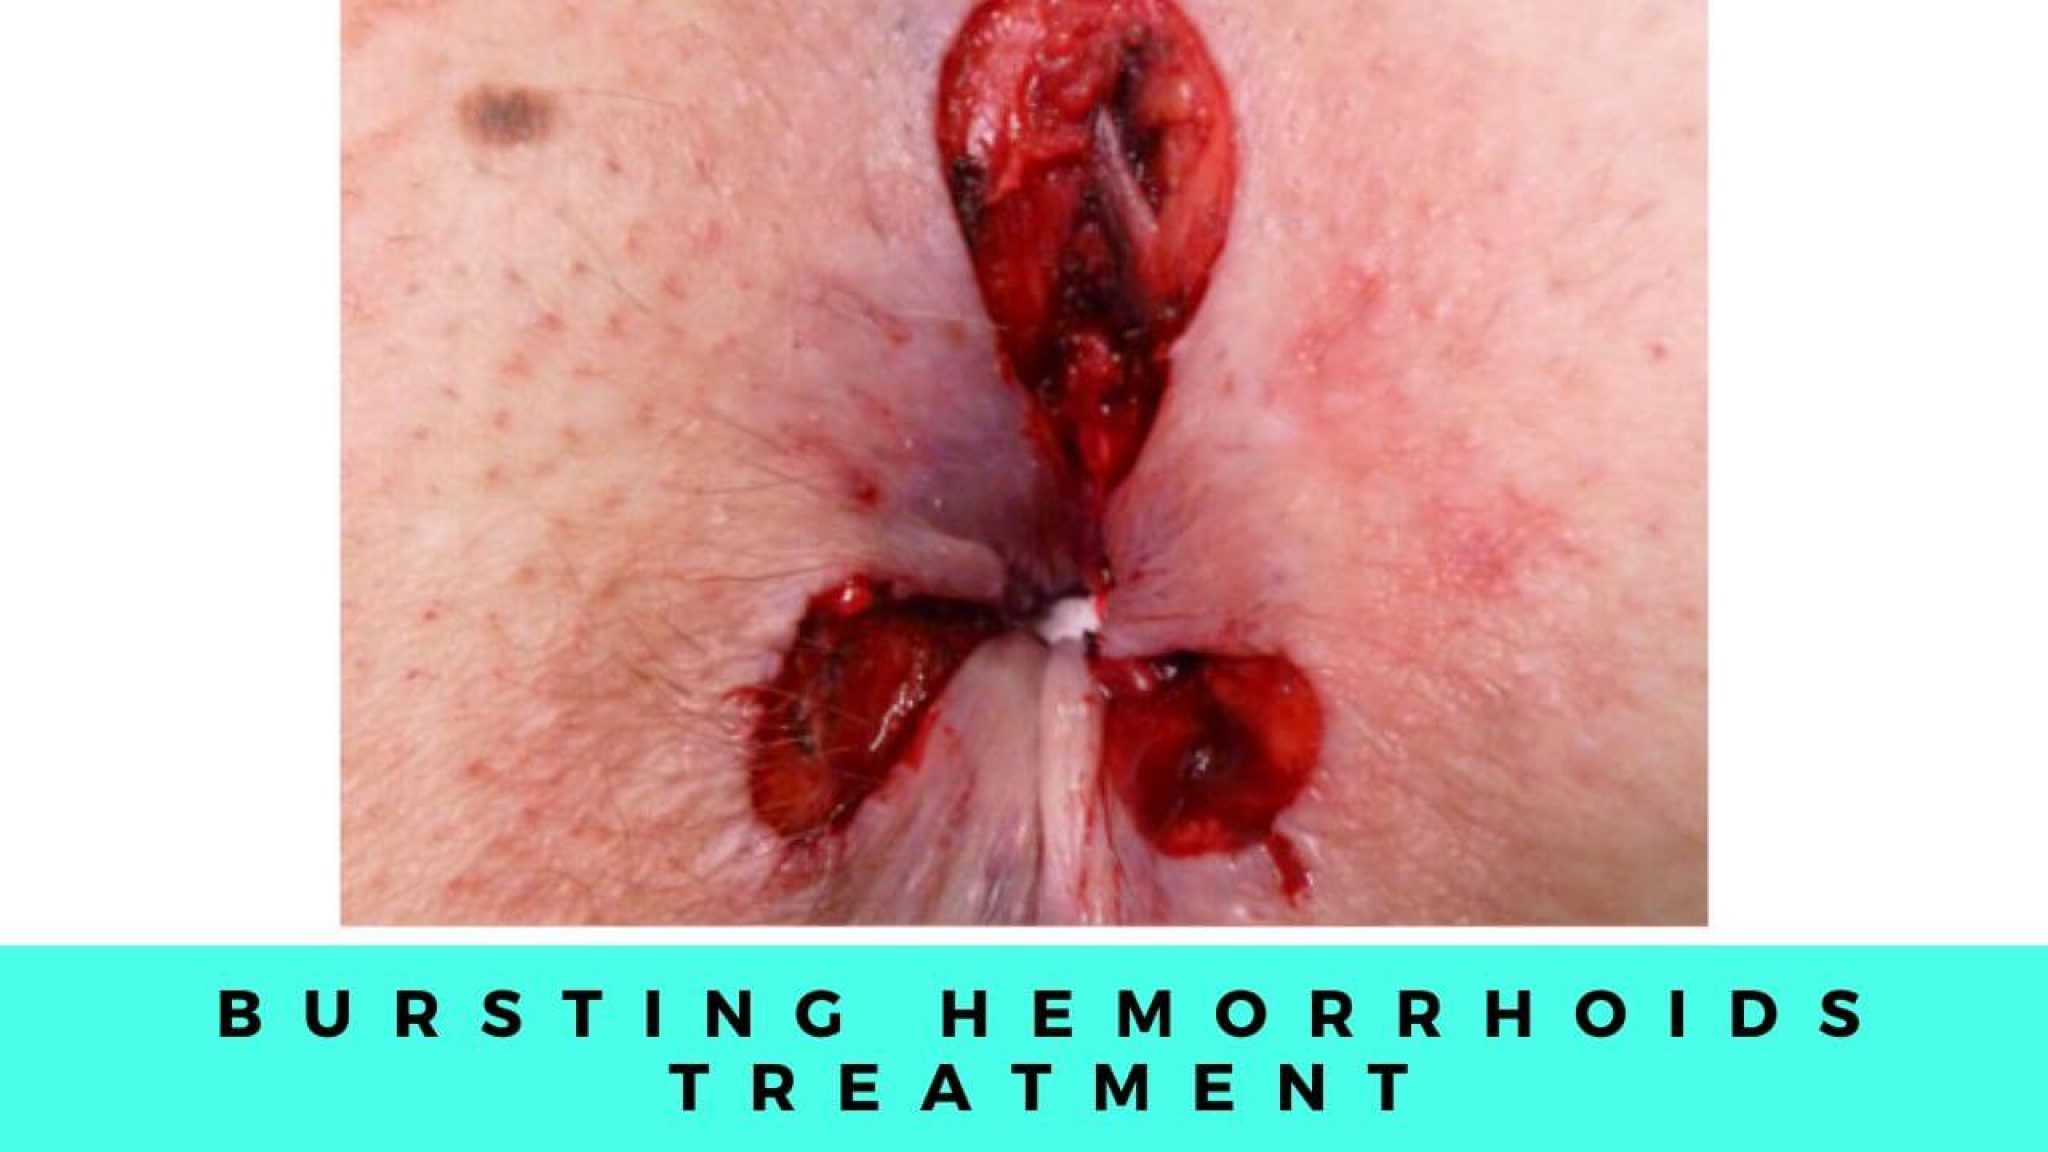 Hemorrhoids Bursting Treatment, Symptoms and Causes